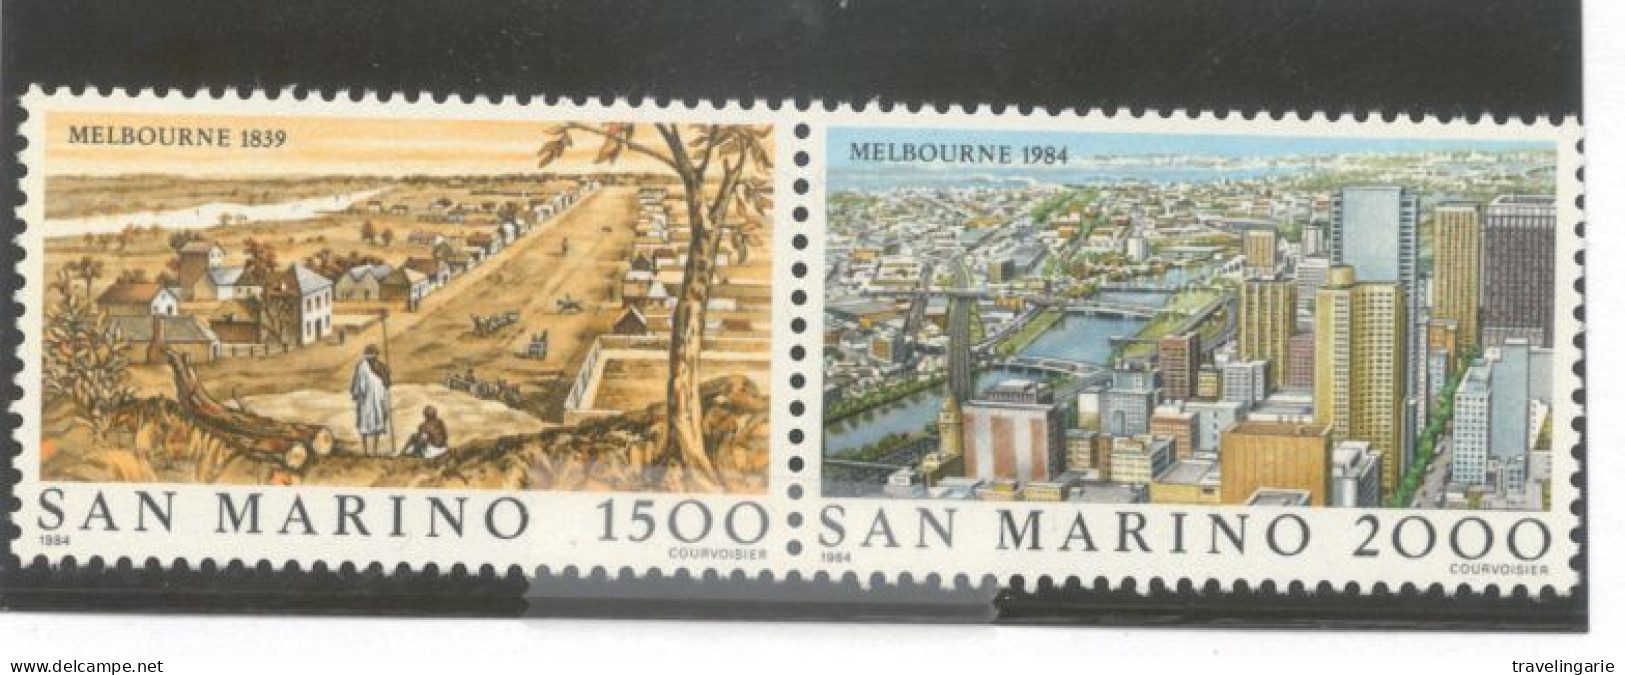 San Marino 1984 Famous Cities Melbourne MNH ** Se-tenant Pair - Ungebraucht